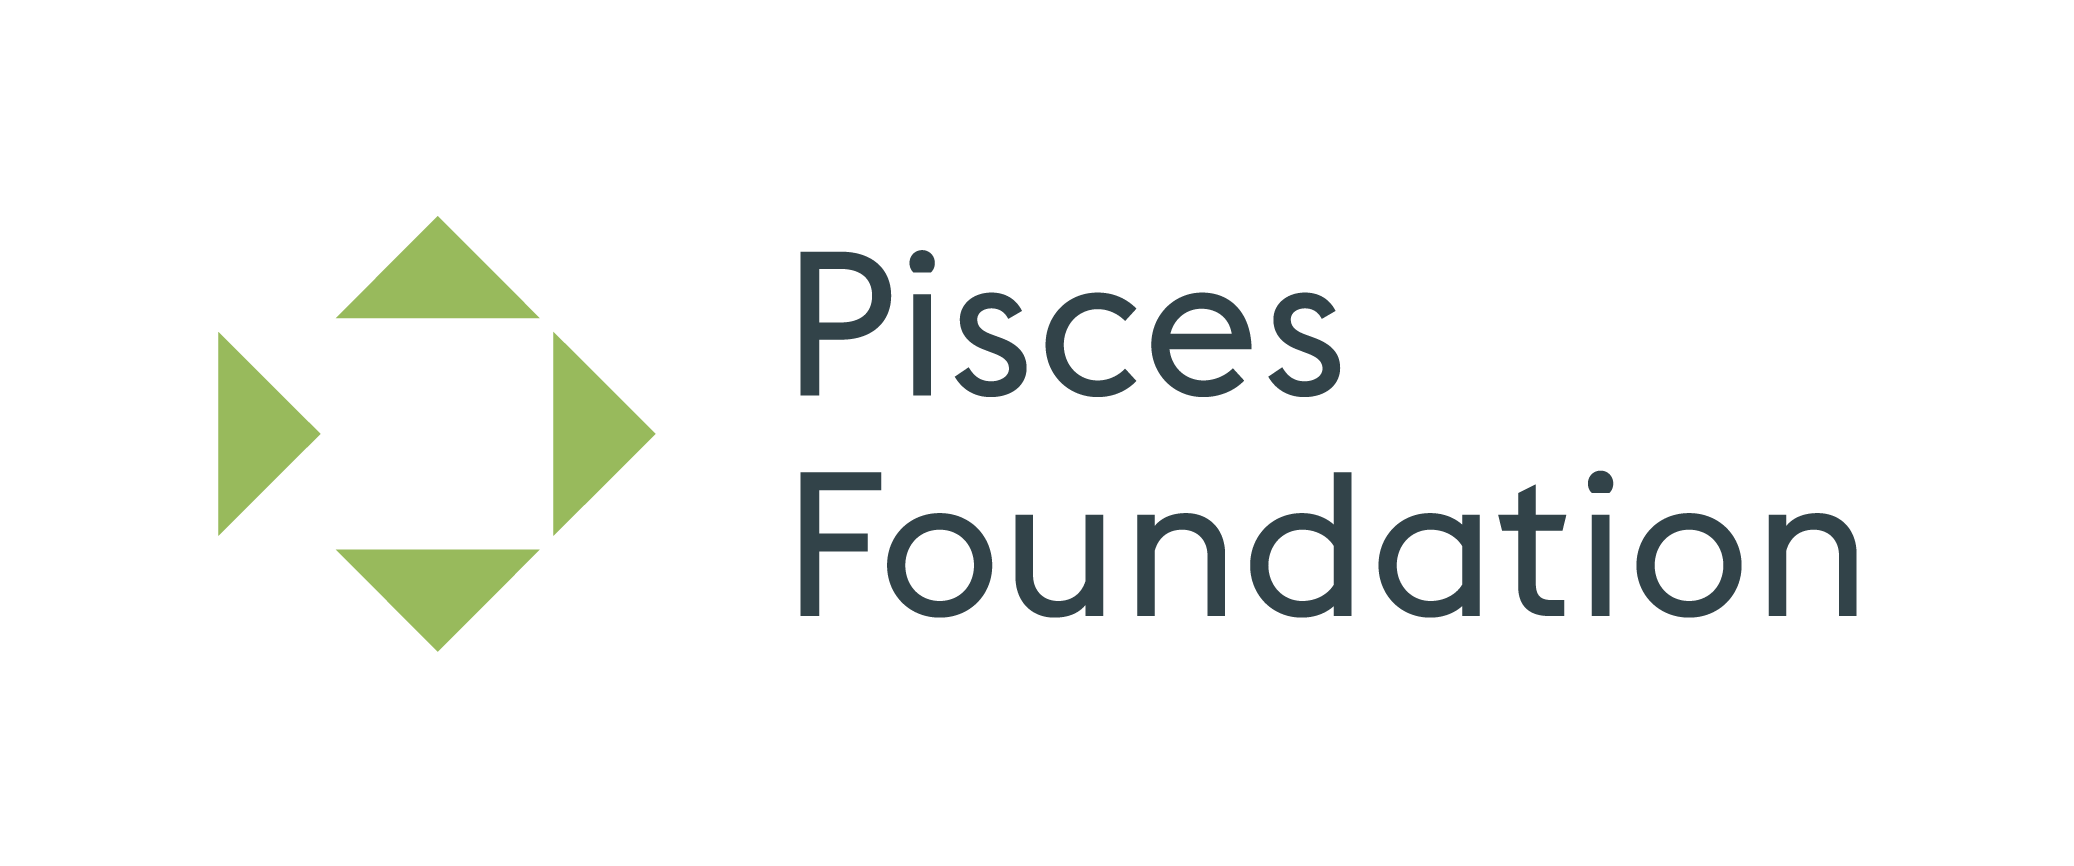 Pisces Foundation logo